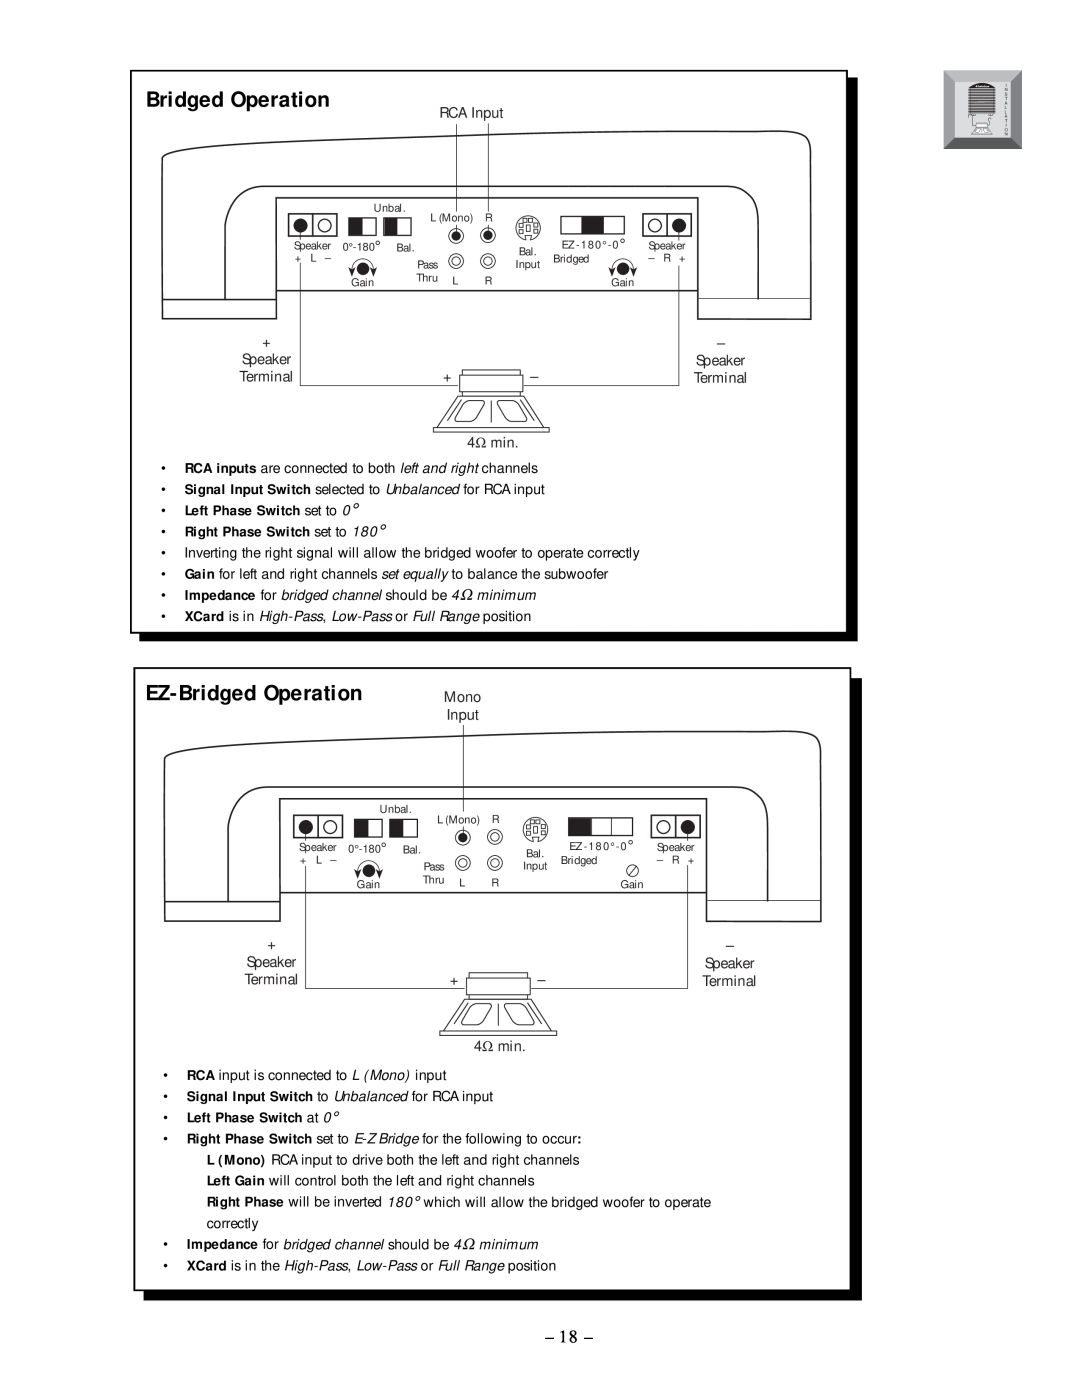 Rockford Fosgate 250.2 manual Bridged Operation, EZ-BridgedOperation, Left Phase Switch set to, Right Phase Switch set to 